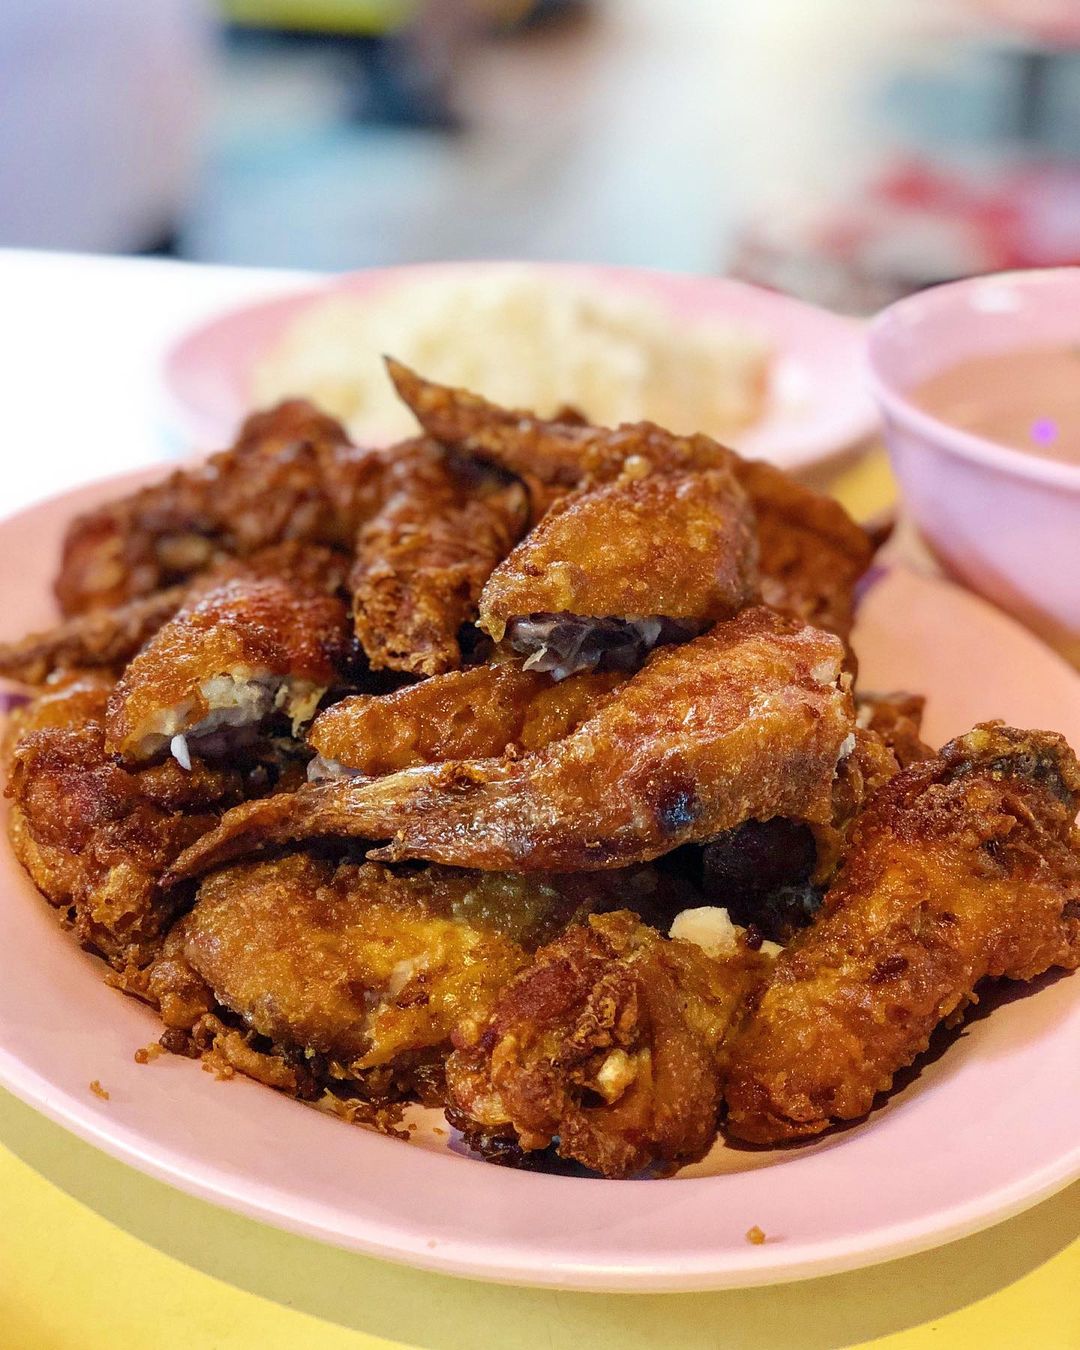 da ji hainanese chicken rice - fried chicken wings